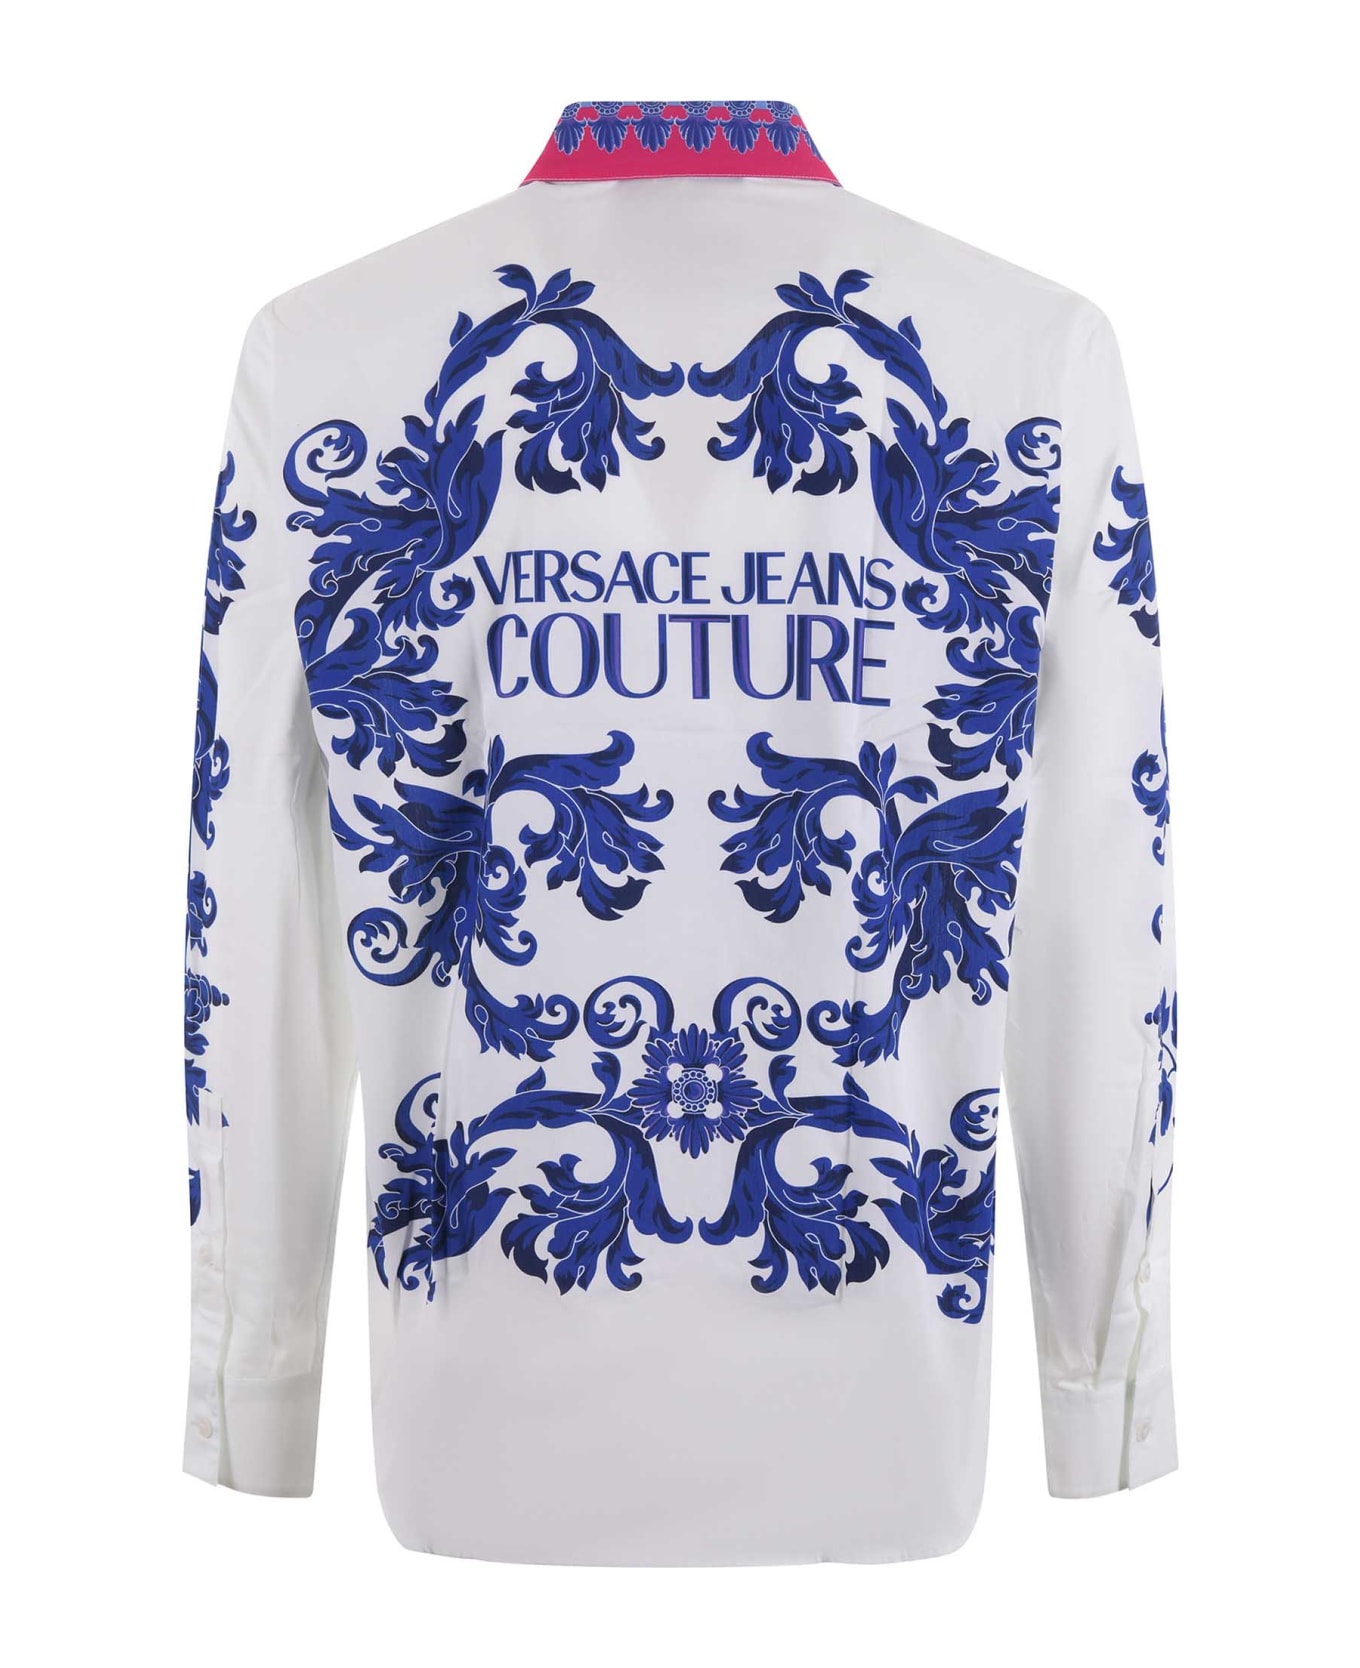 Versace Jeans Couture Shirt - Bianco/multicolor